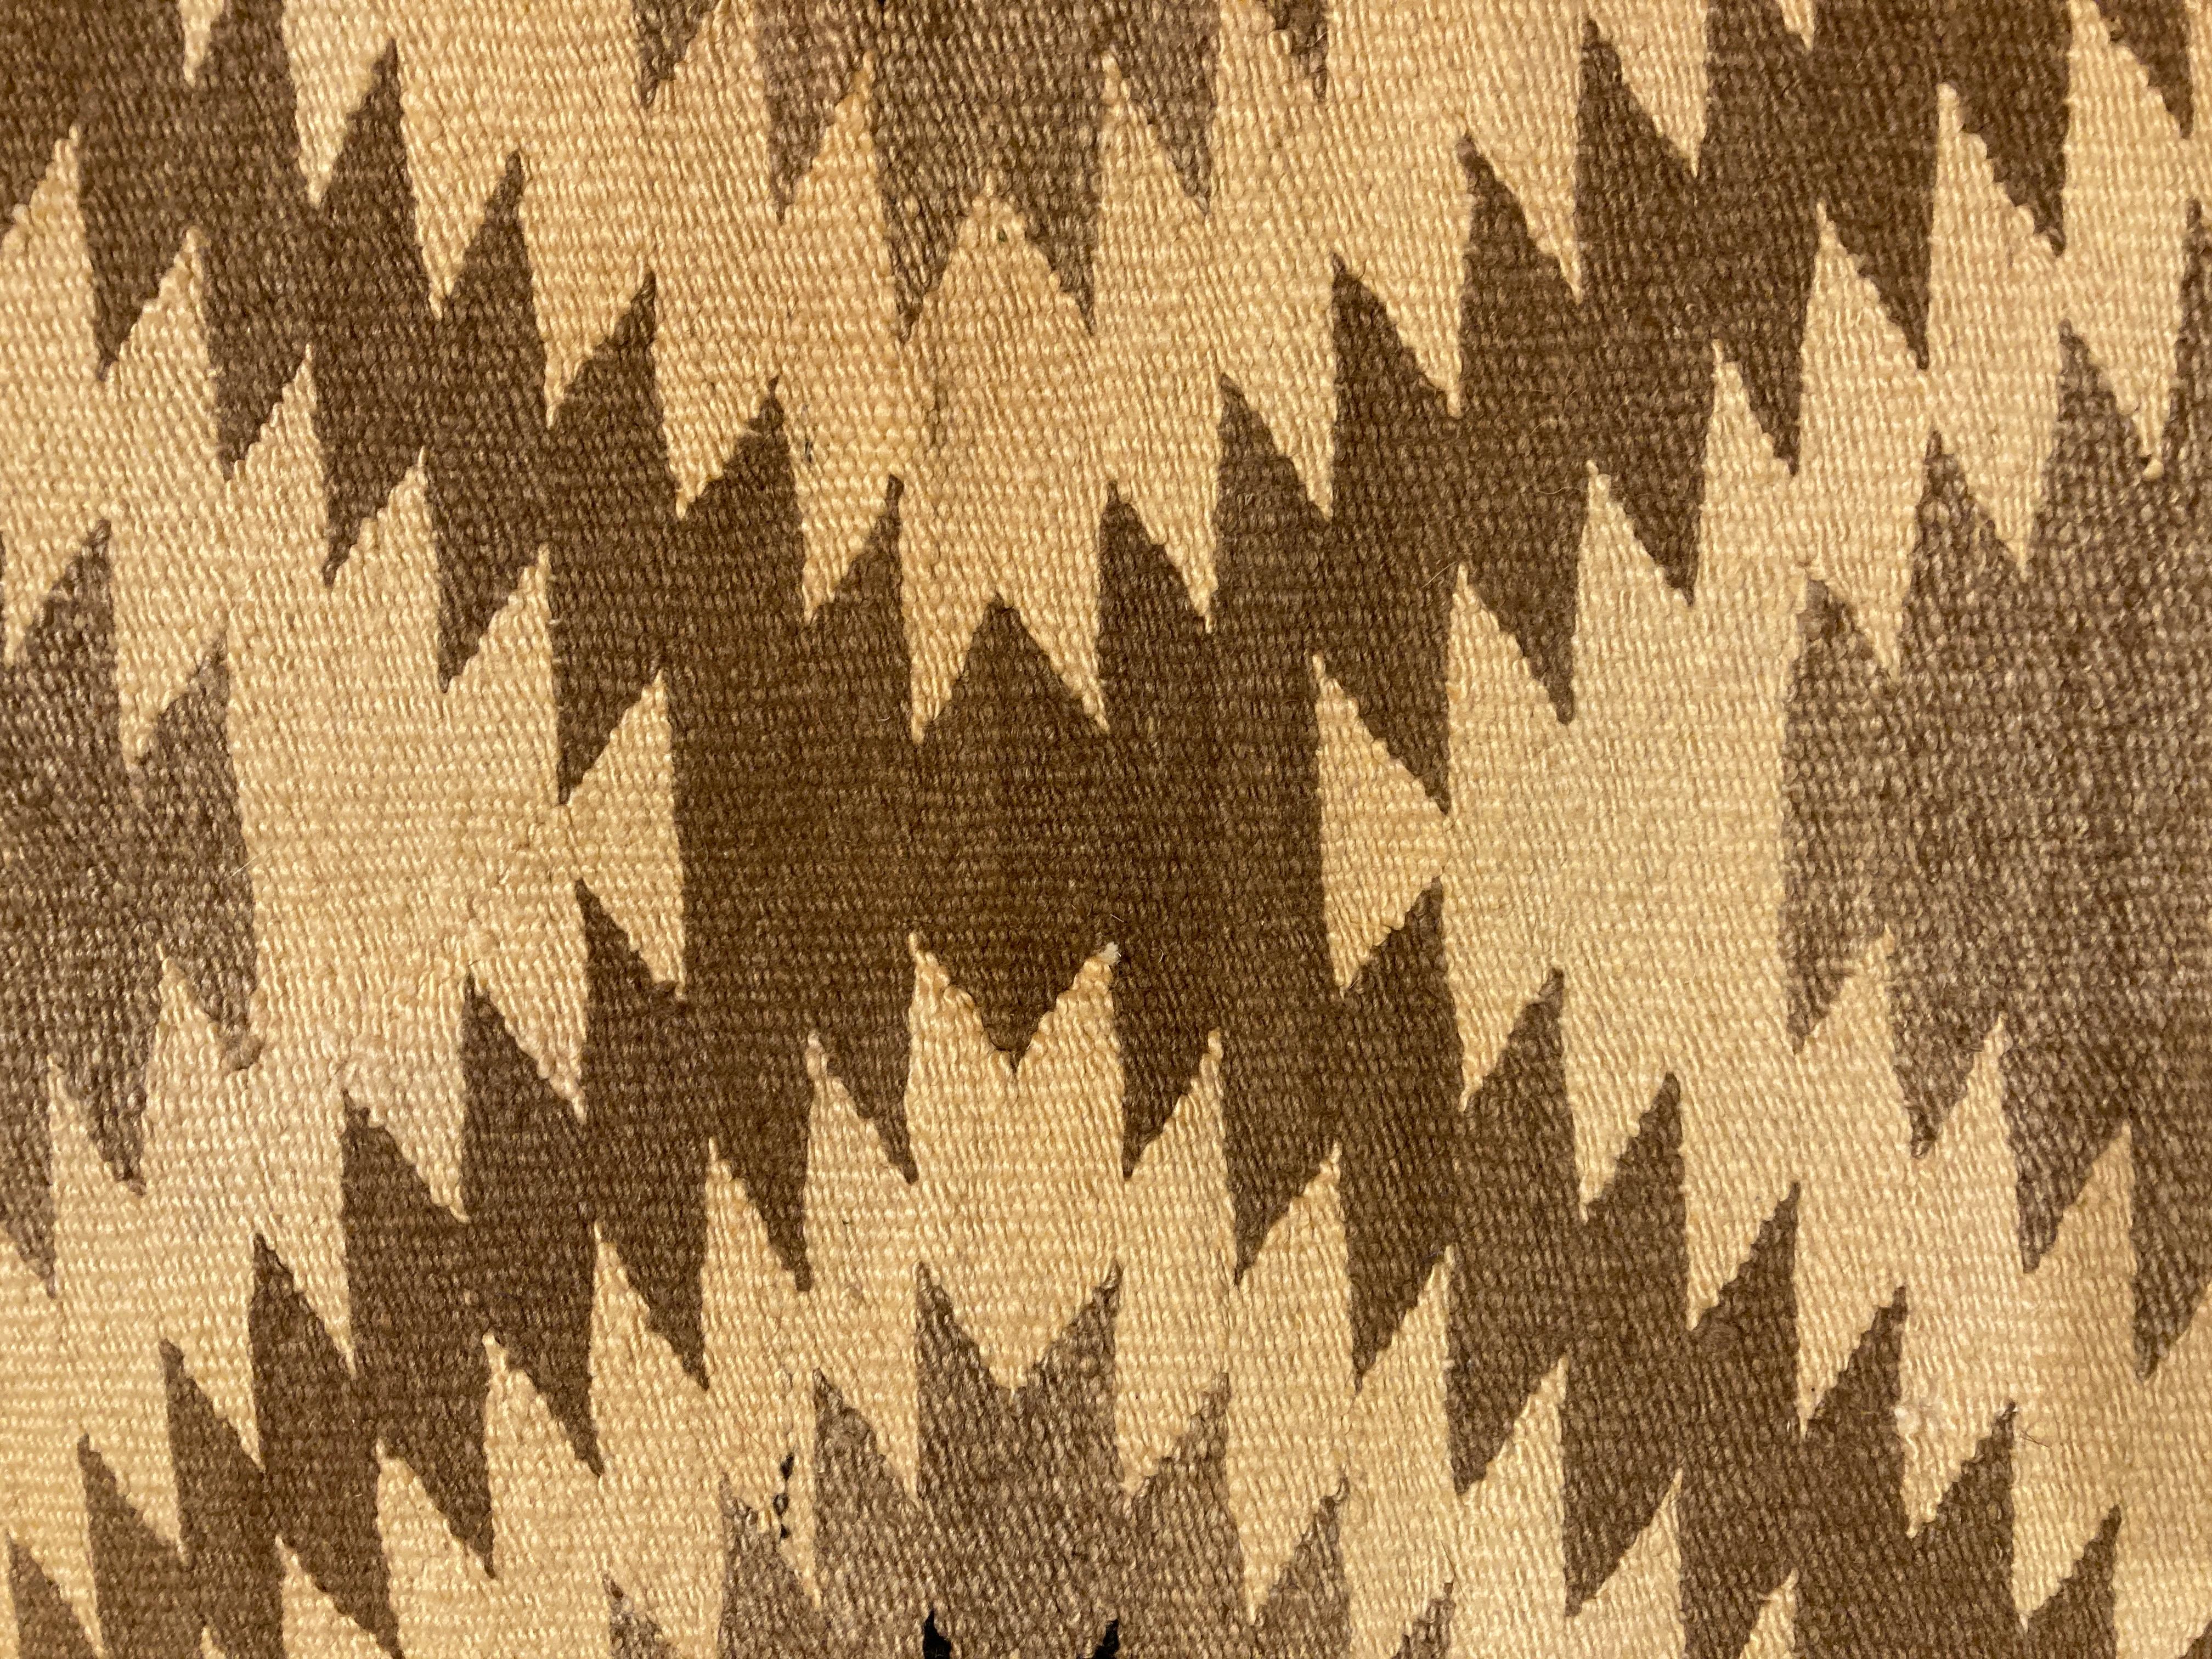 Hand-Woven Small Navajo Rug in Earthtone Colors